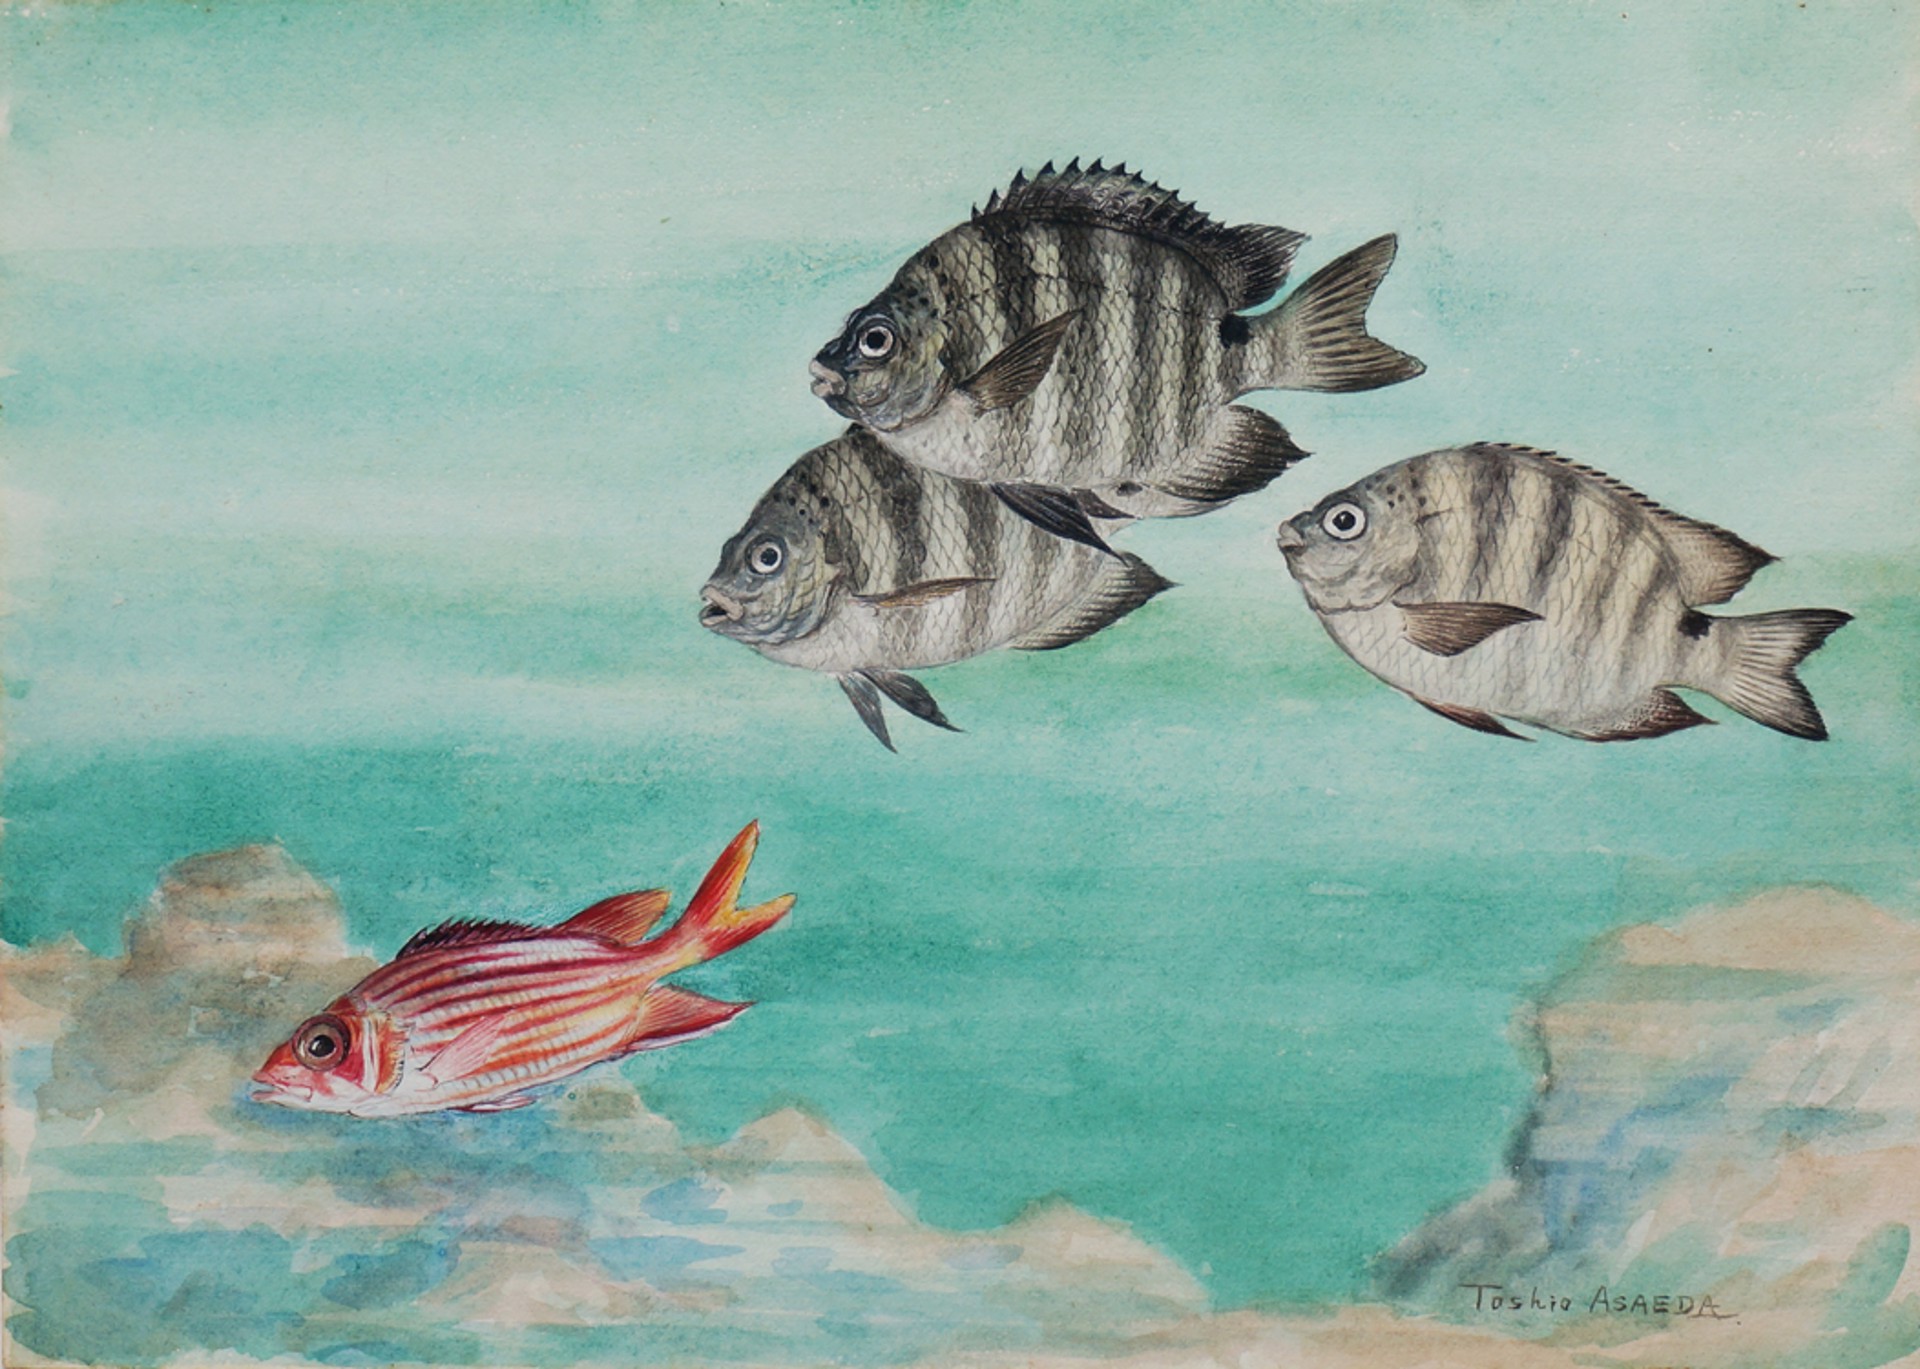 Pomcentridae (Damsel fishes) and Squirrel fish by Toshio Asaeda